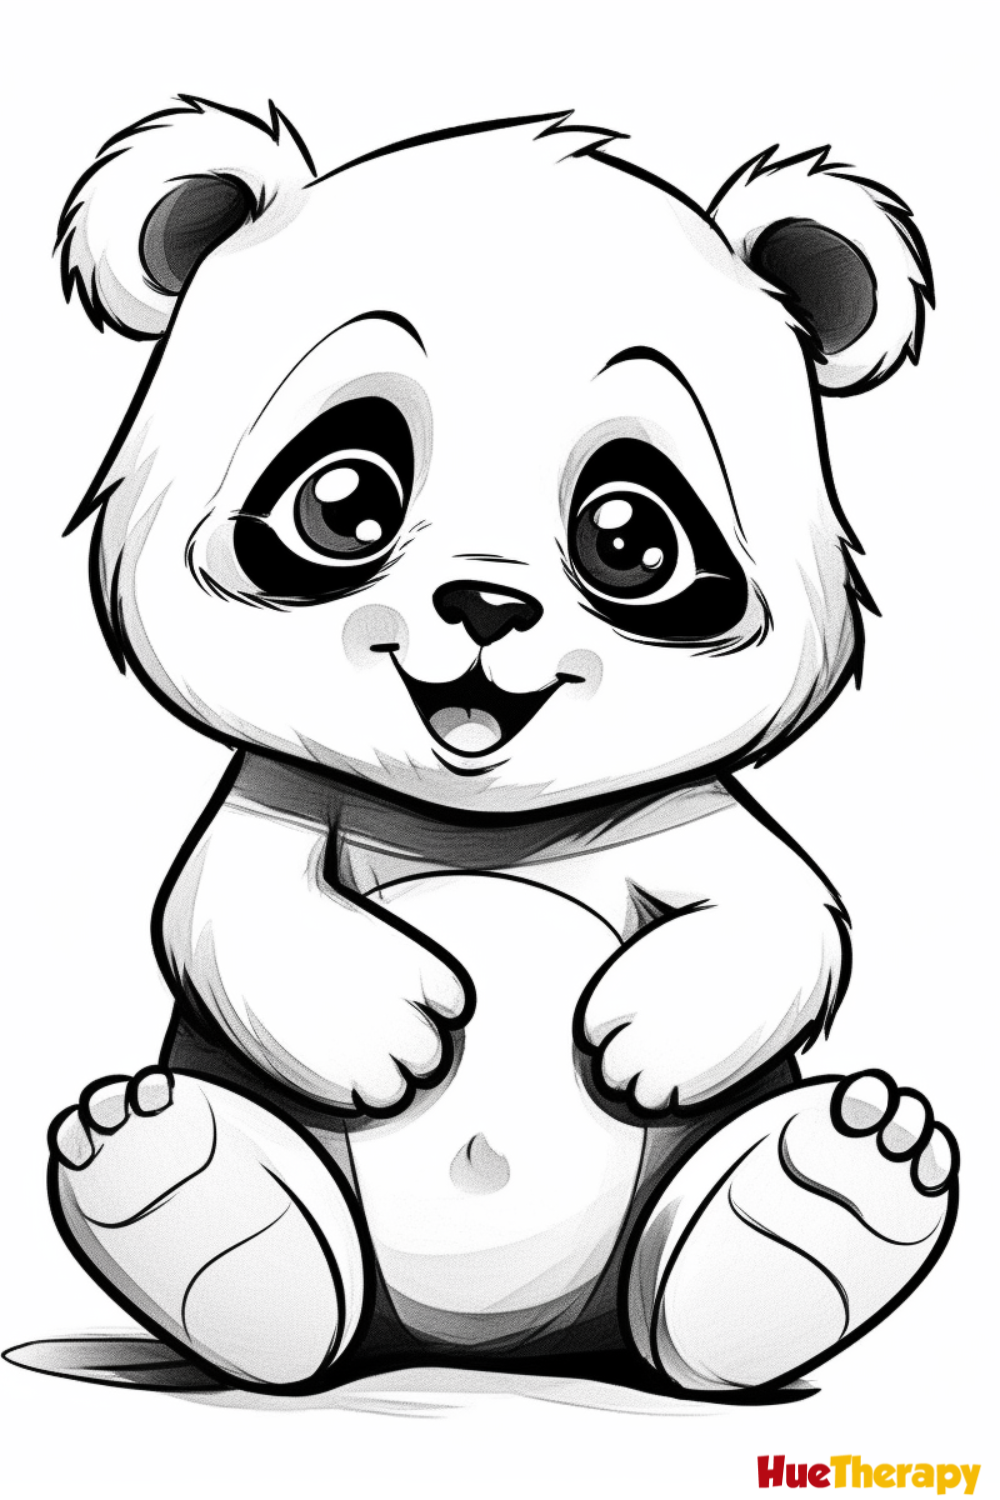 Free printable panda coloring pages for kids easy animal drawings panda coloring pages cartoon drawings